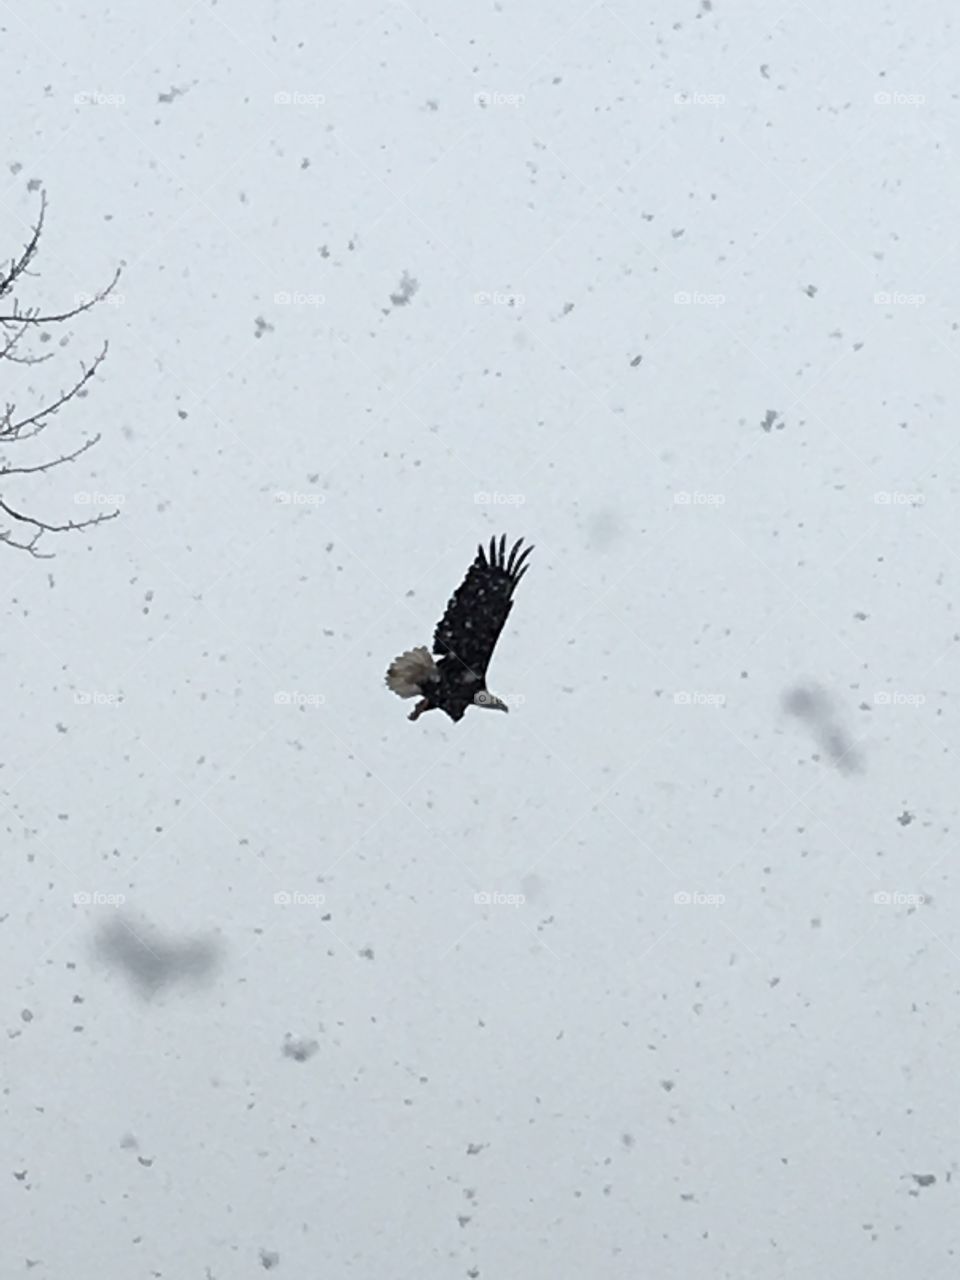 Bald eagle in the snowfall. 